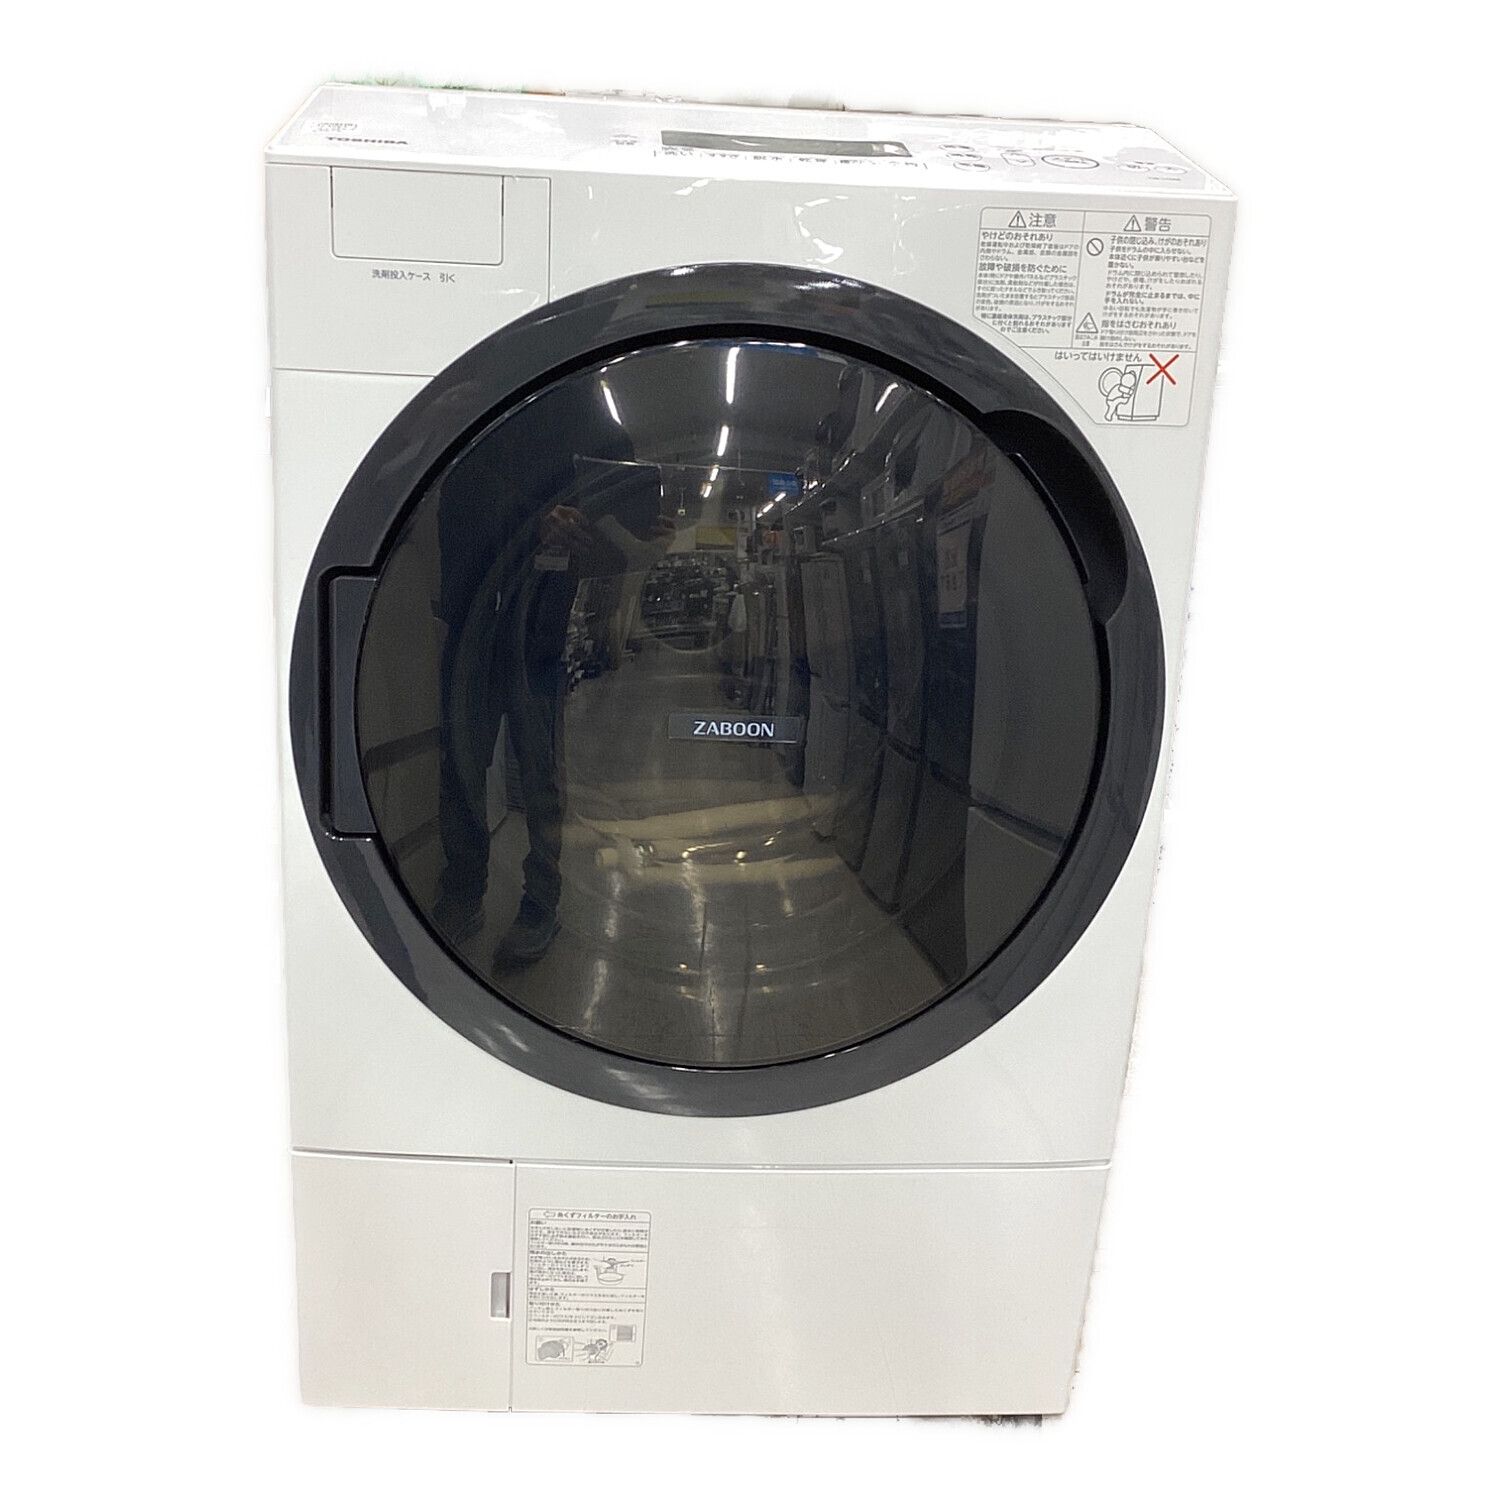 TOSHIBA (トウシバ) ドラム式洗濯乾燥機 11.0kg 7.0kg TW-117A8L 2020 